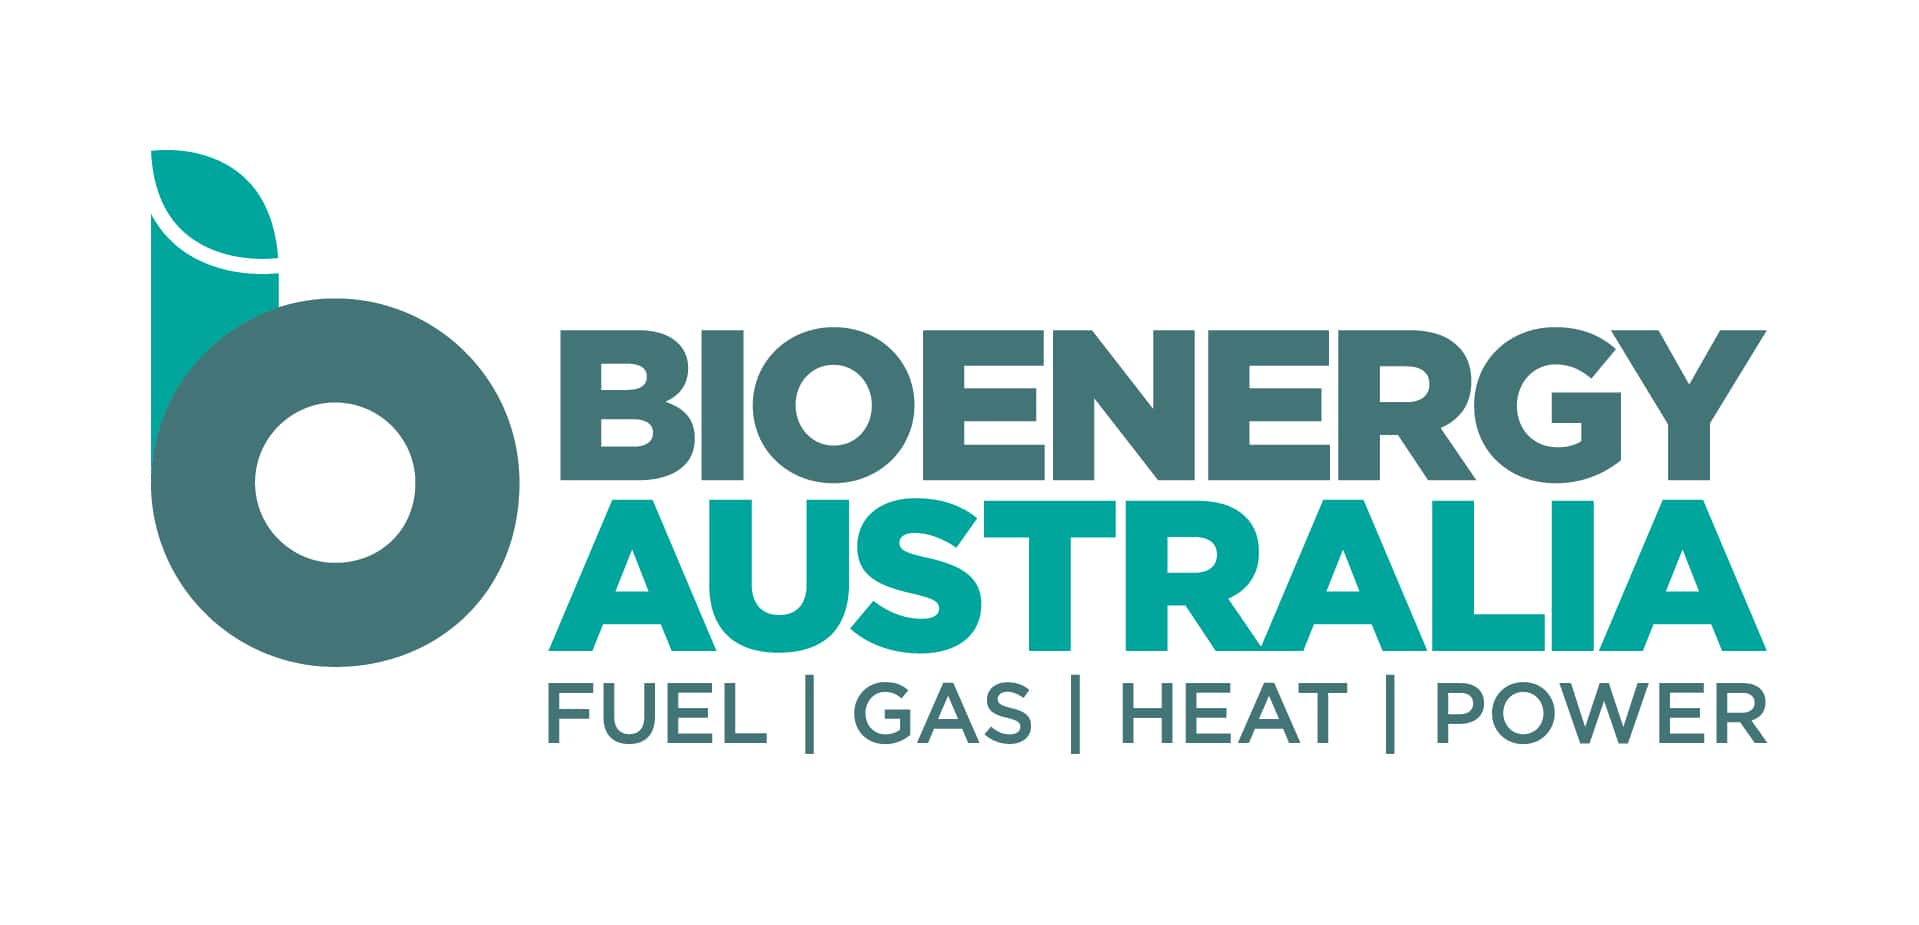 Bioenergy Australia logo